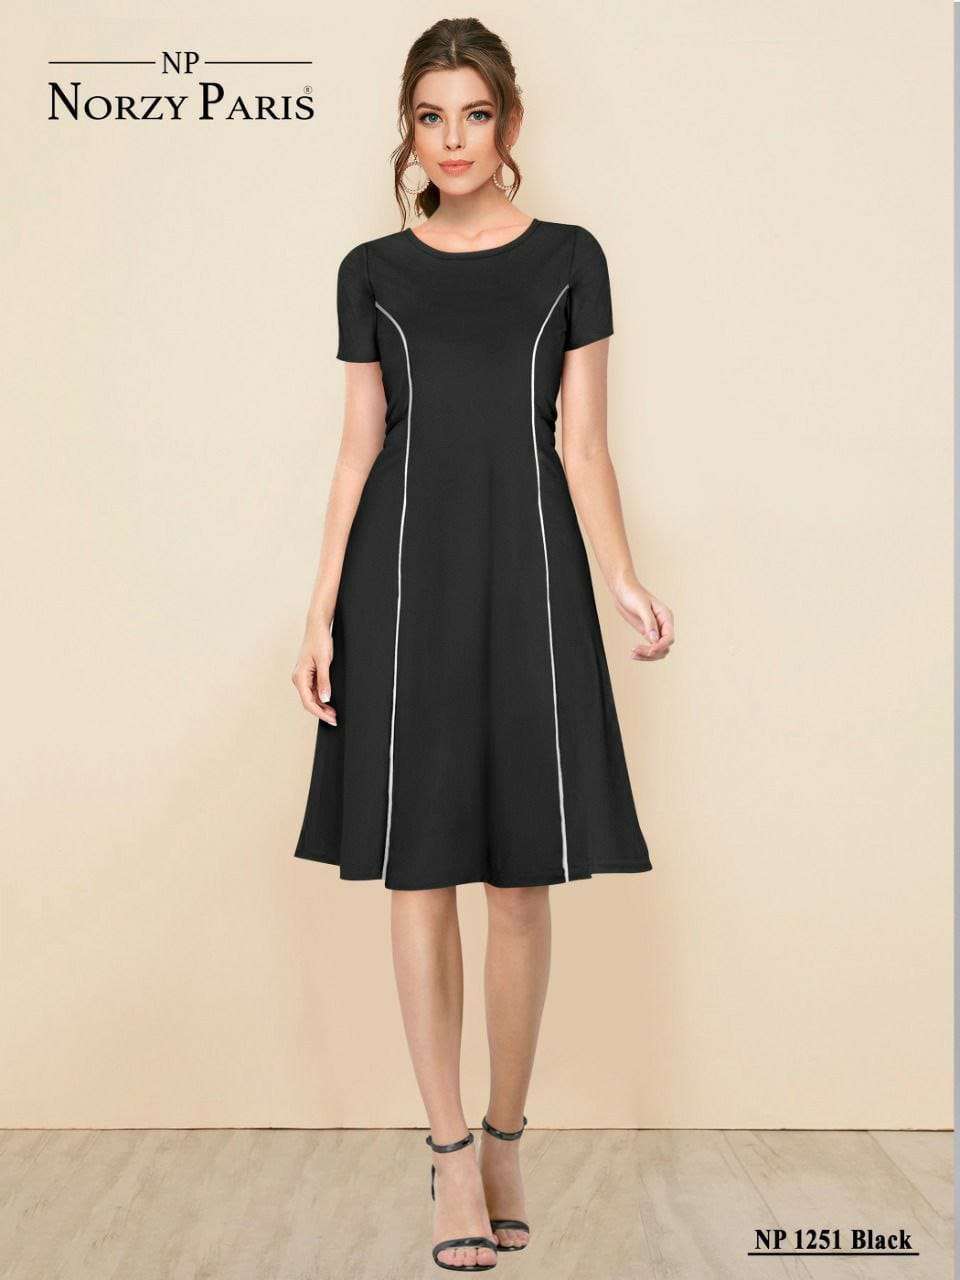 NORZY PARIS NP 1251 Black Designer Western Dress  Dress Wholesale catalog